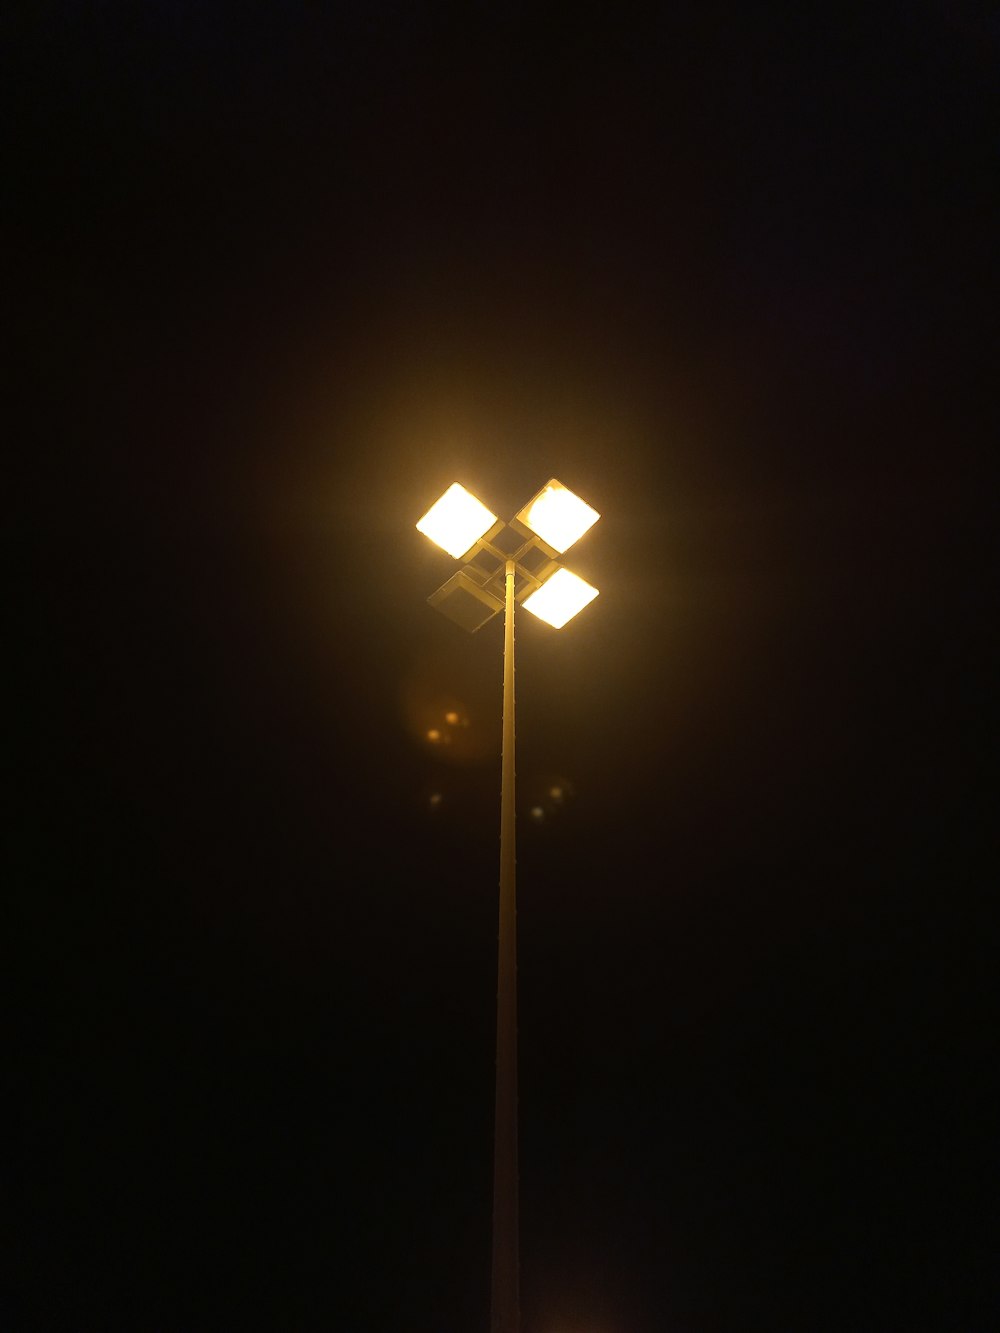 a street light in the dark on a dark night